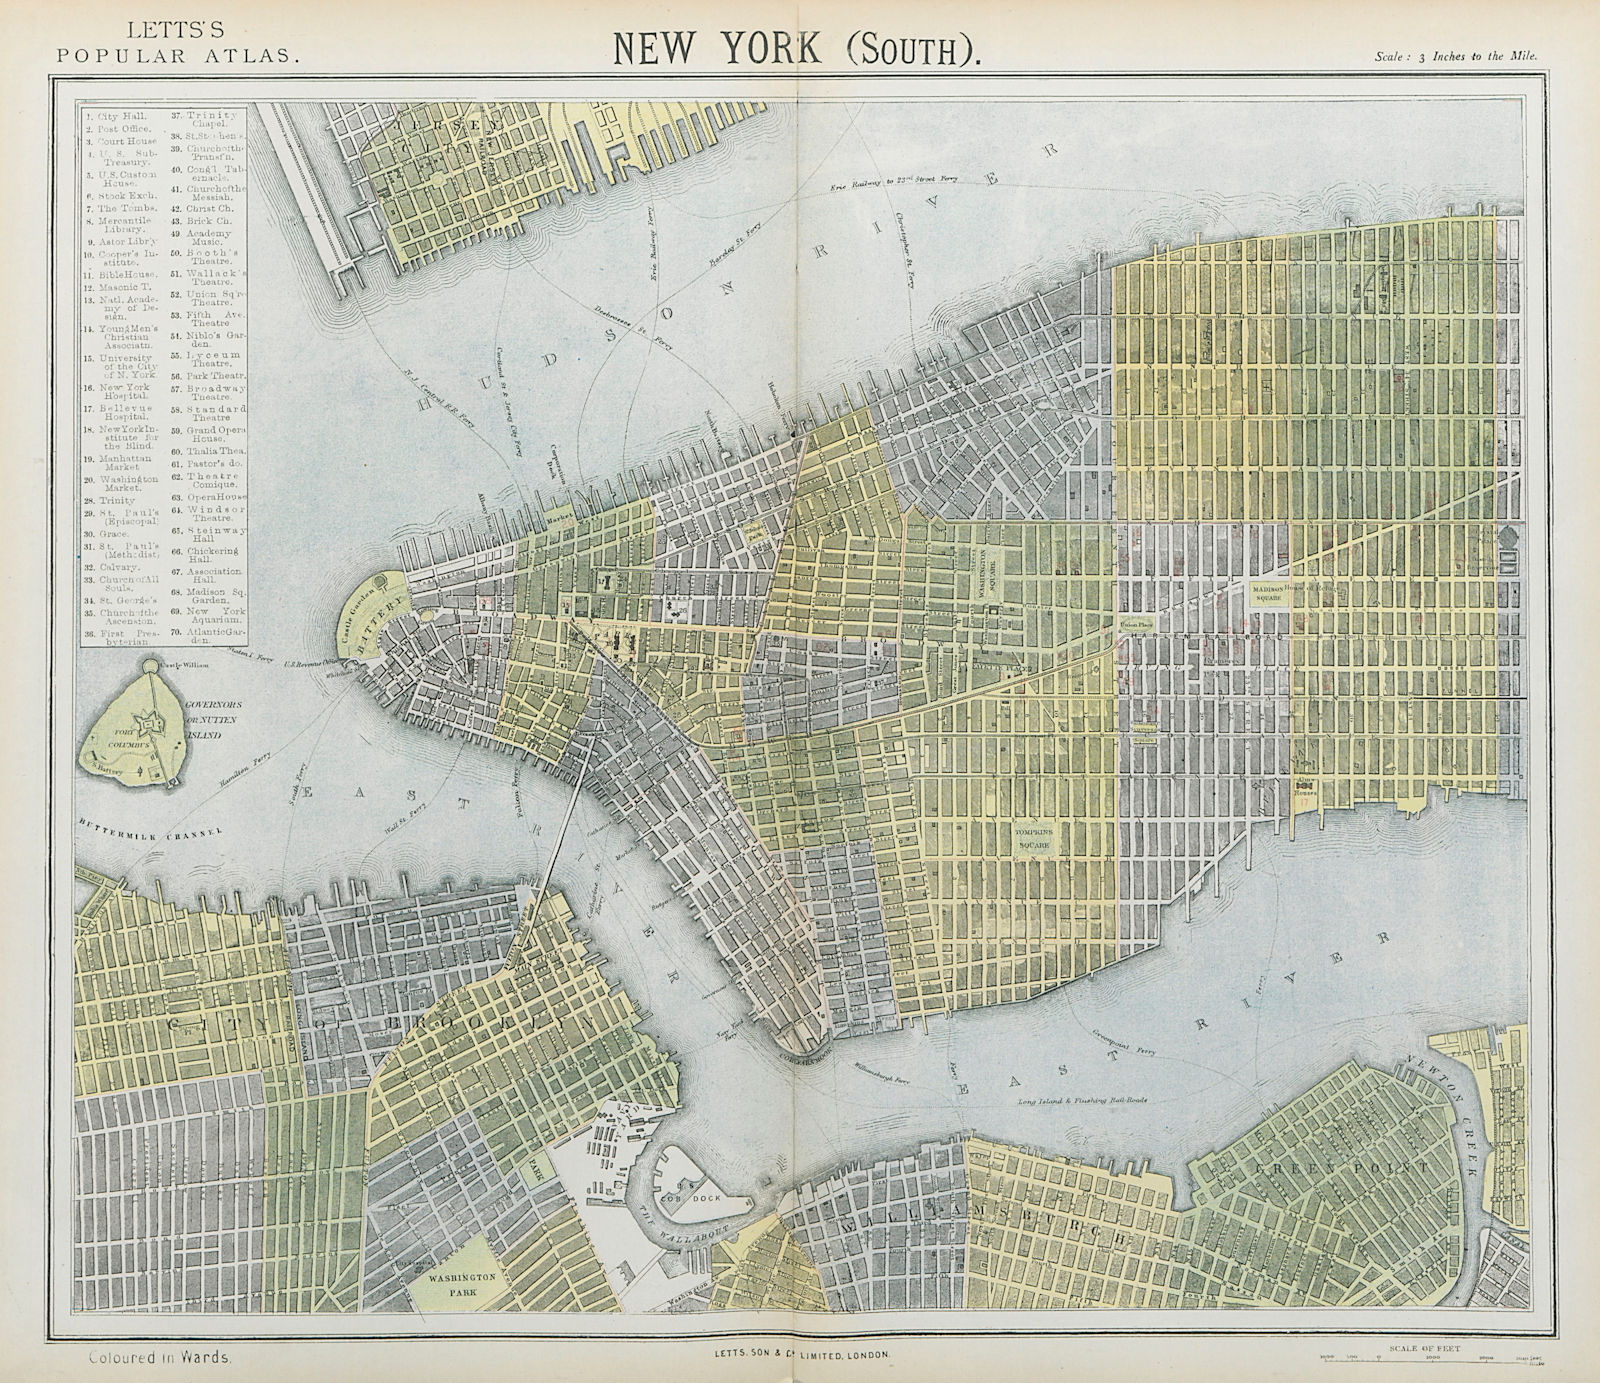 Associate Product NEW YORK CITY town map plan. Lower/midtown Manhattan Brooklyn. LETTS 1883